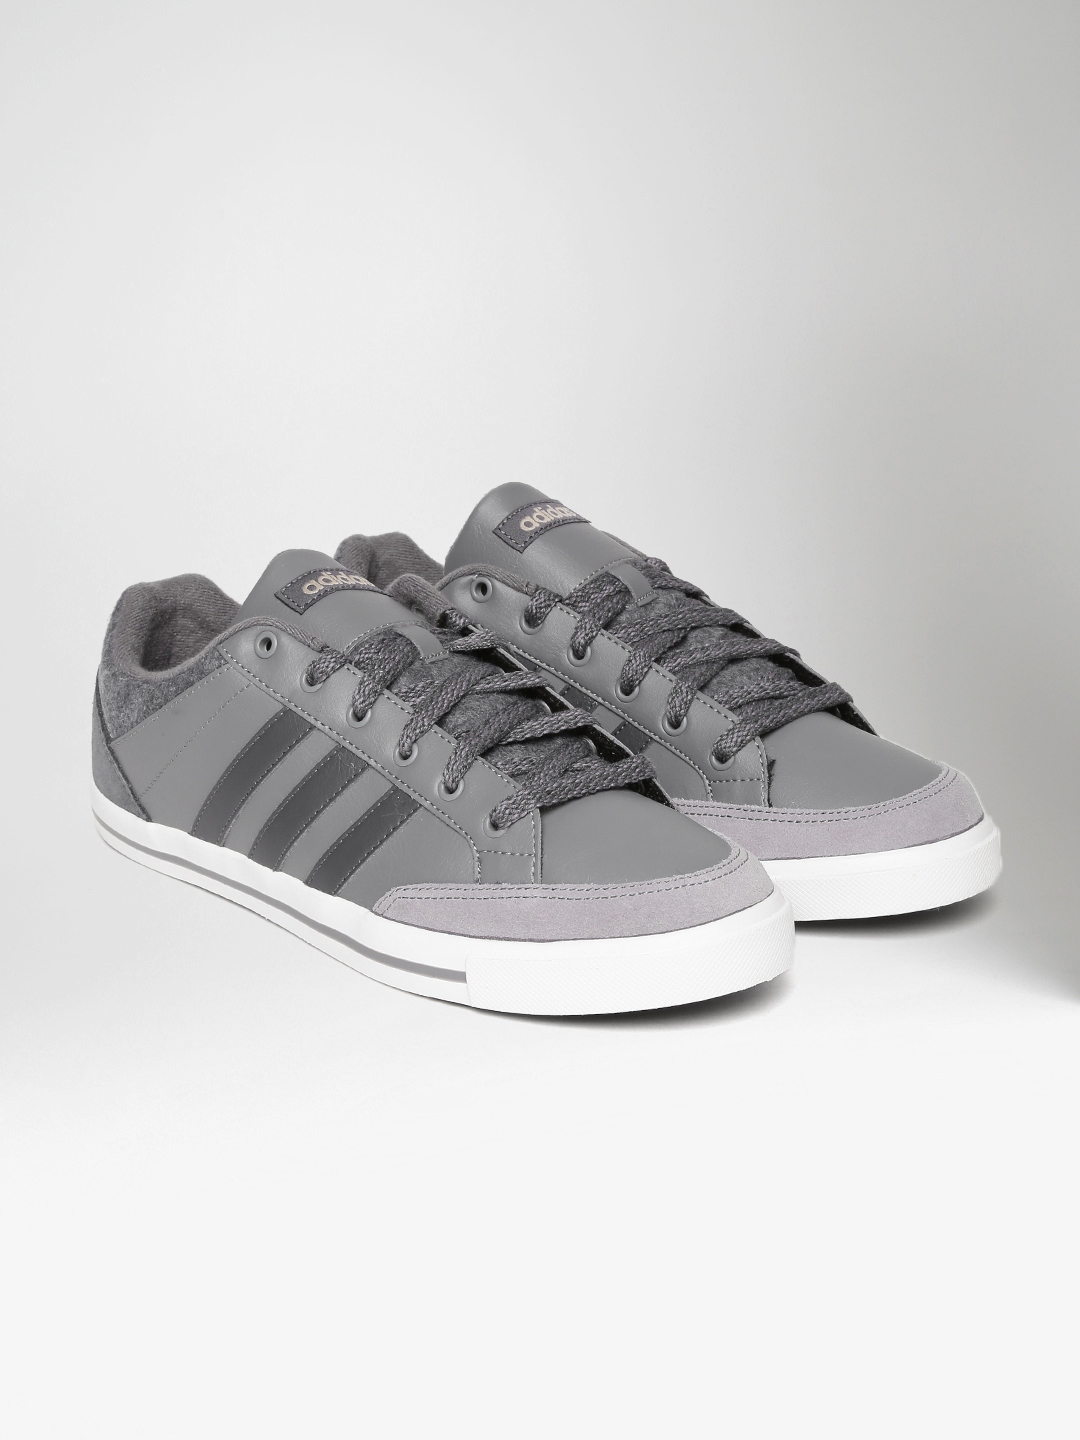 adidas neo gray sneakers